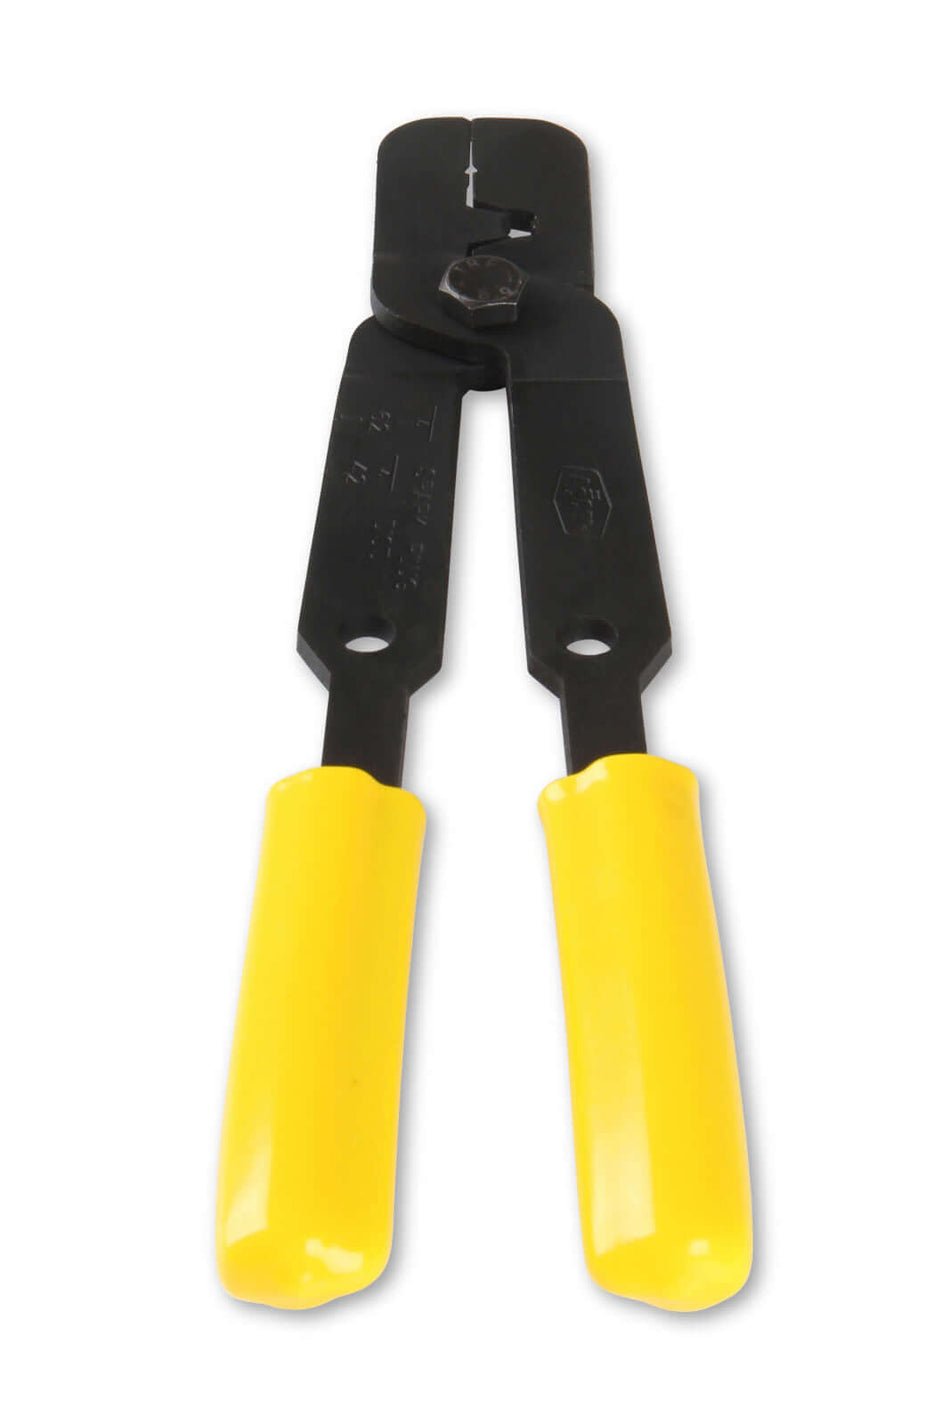 ACCEL Wire Crimp Tool - Superstock - $46.07